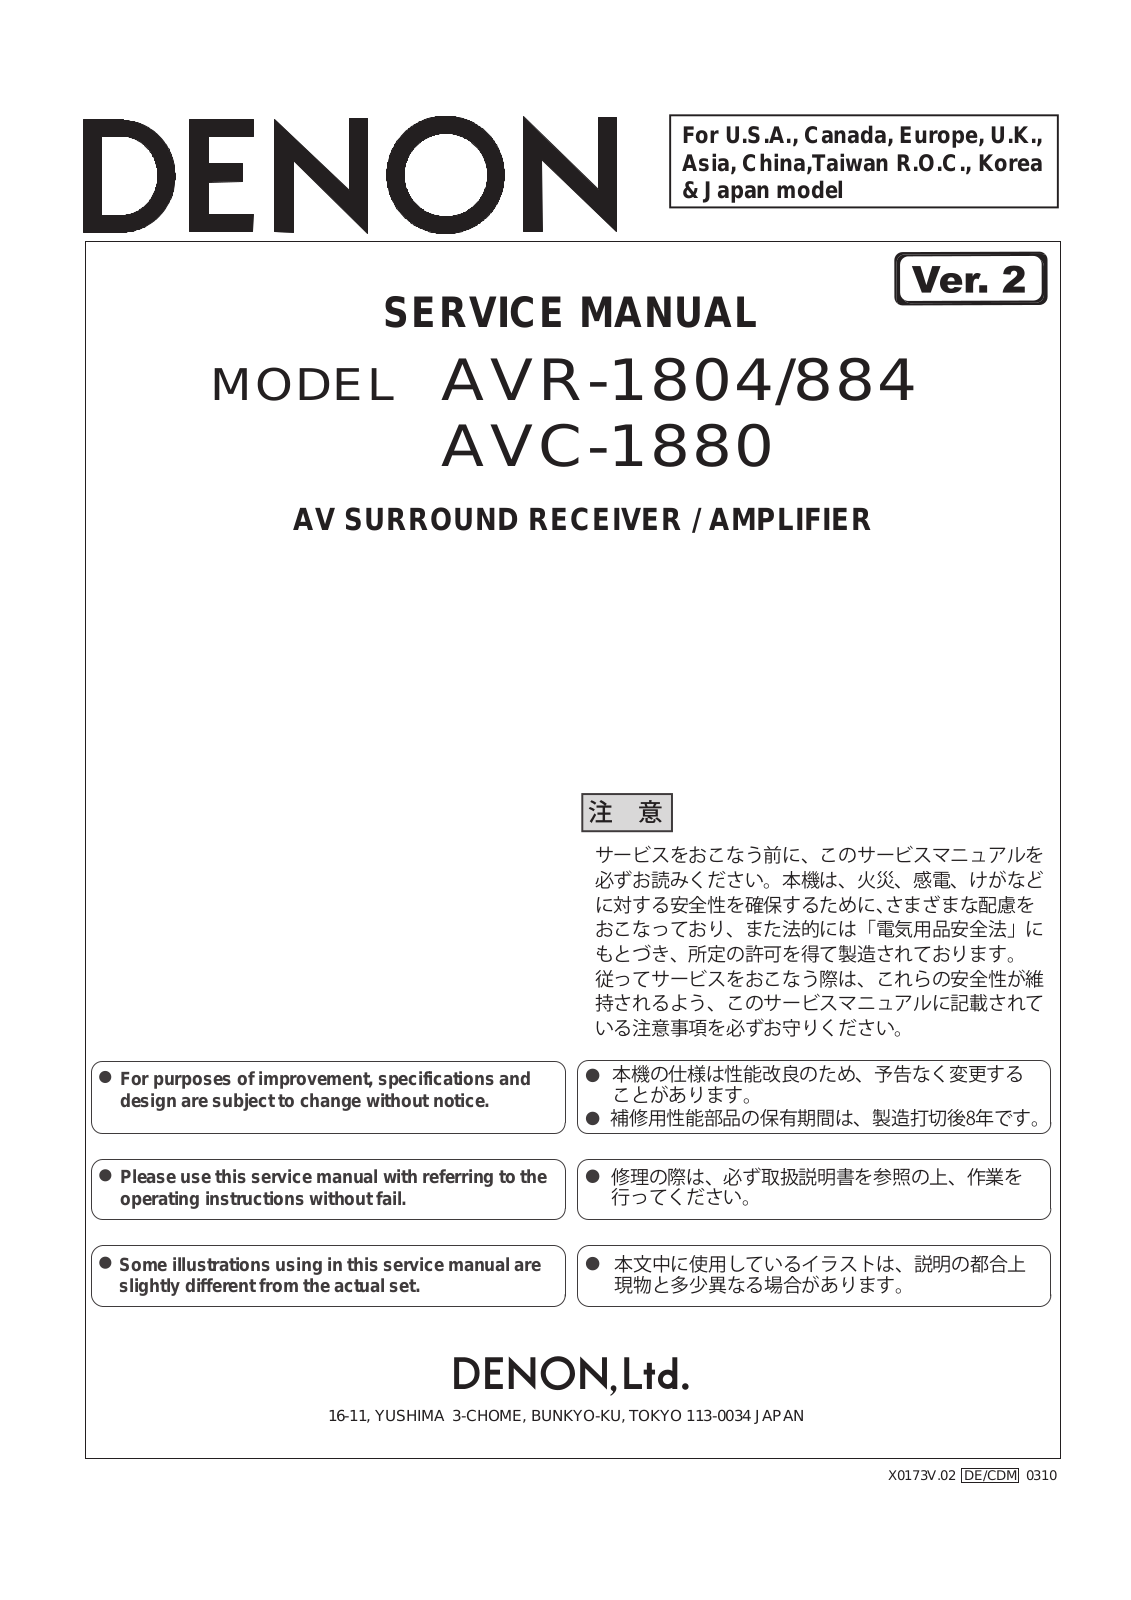 Denon AVC-1880, AVR-1804, AVR-884 Service Manual